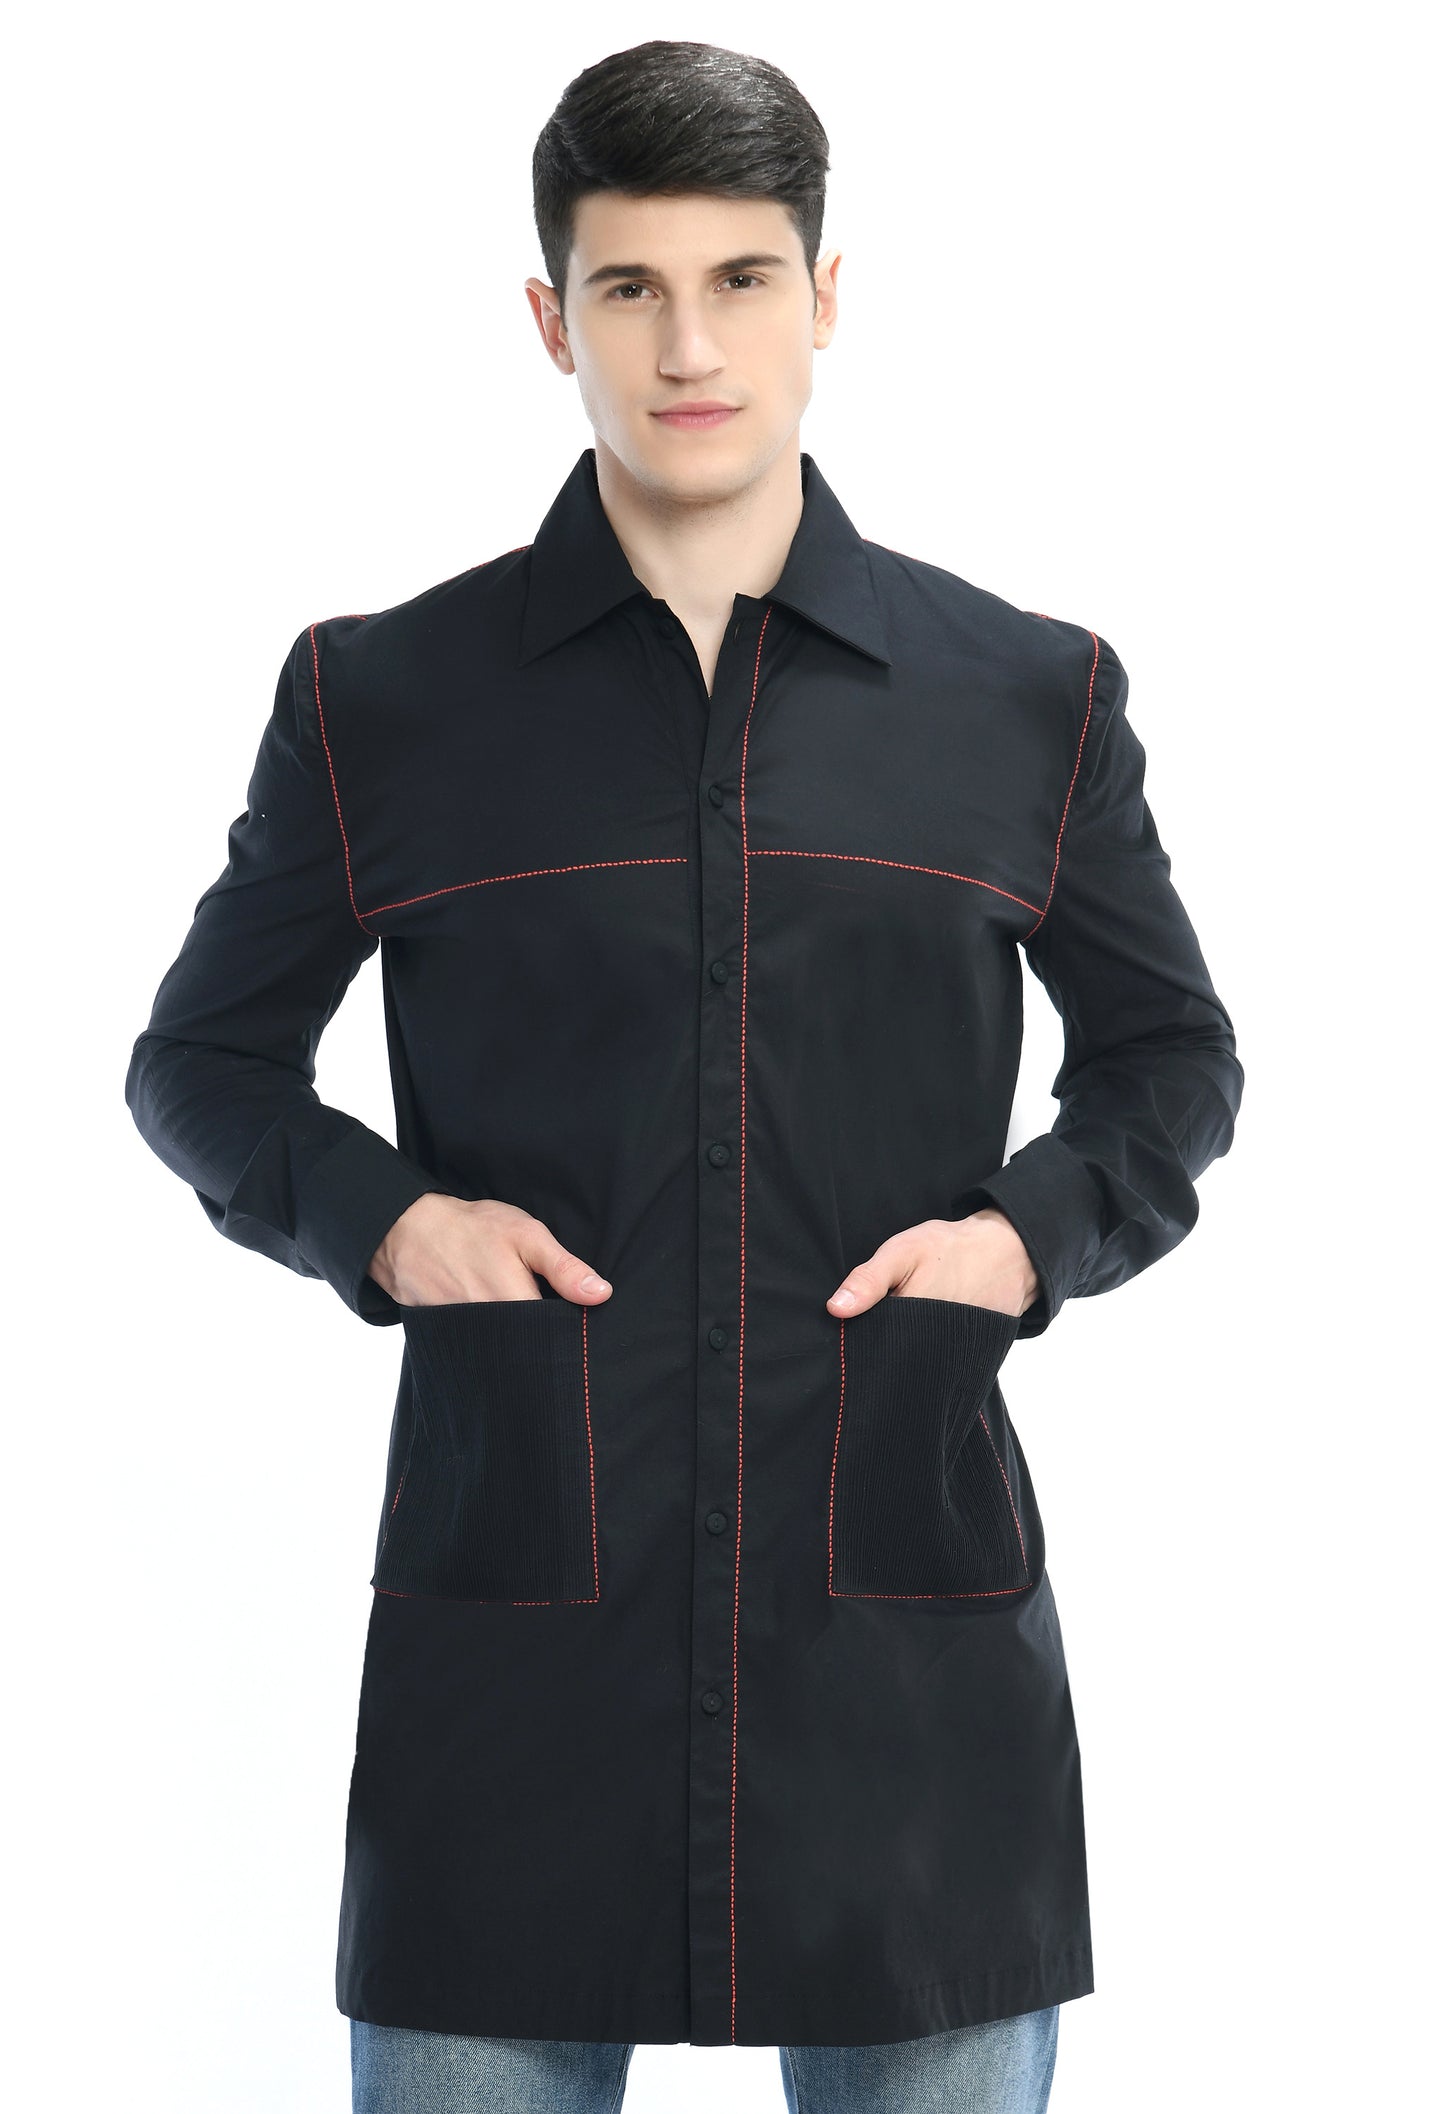 A black cotton shirt with Kantha thread work & pintex pockets